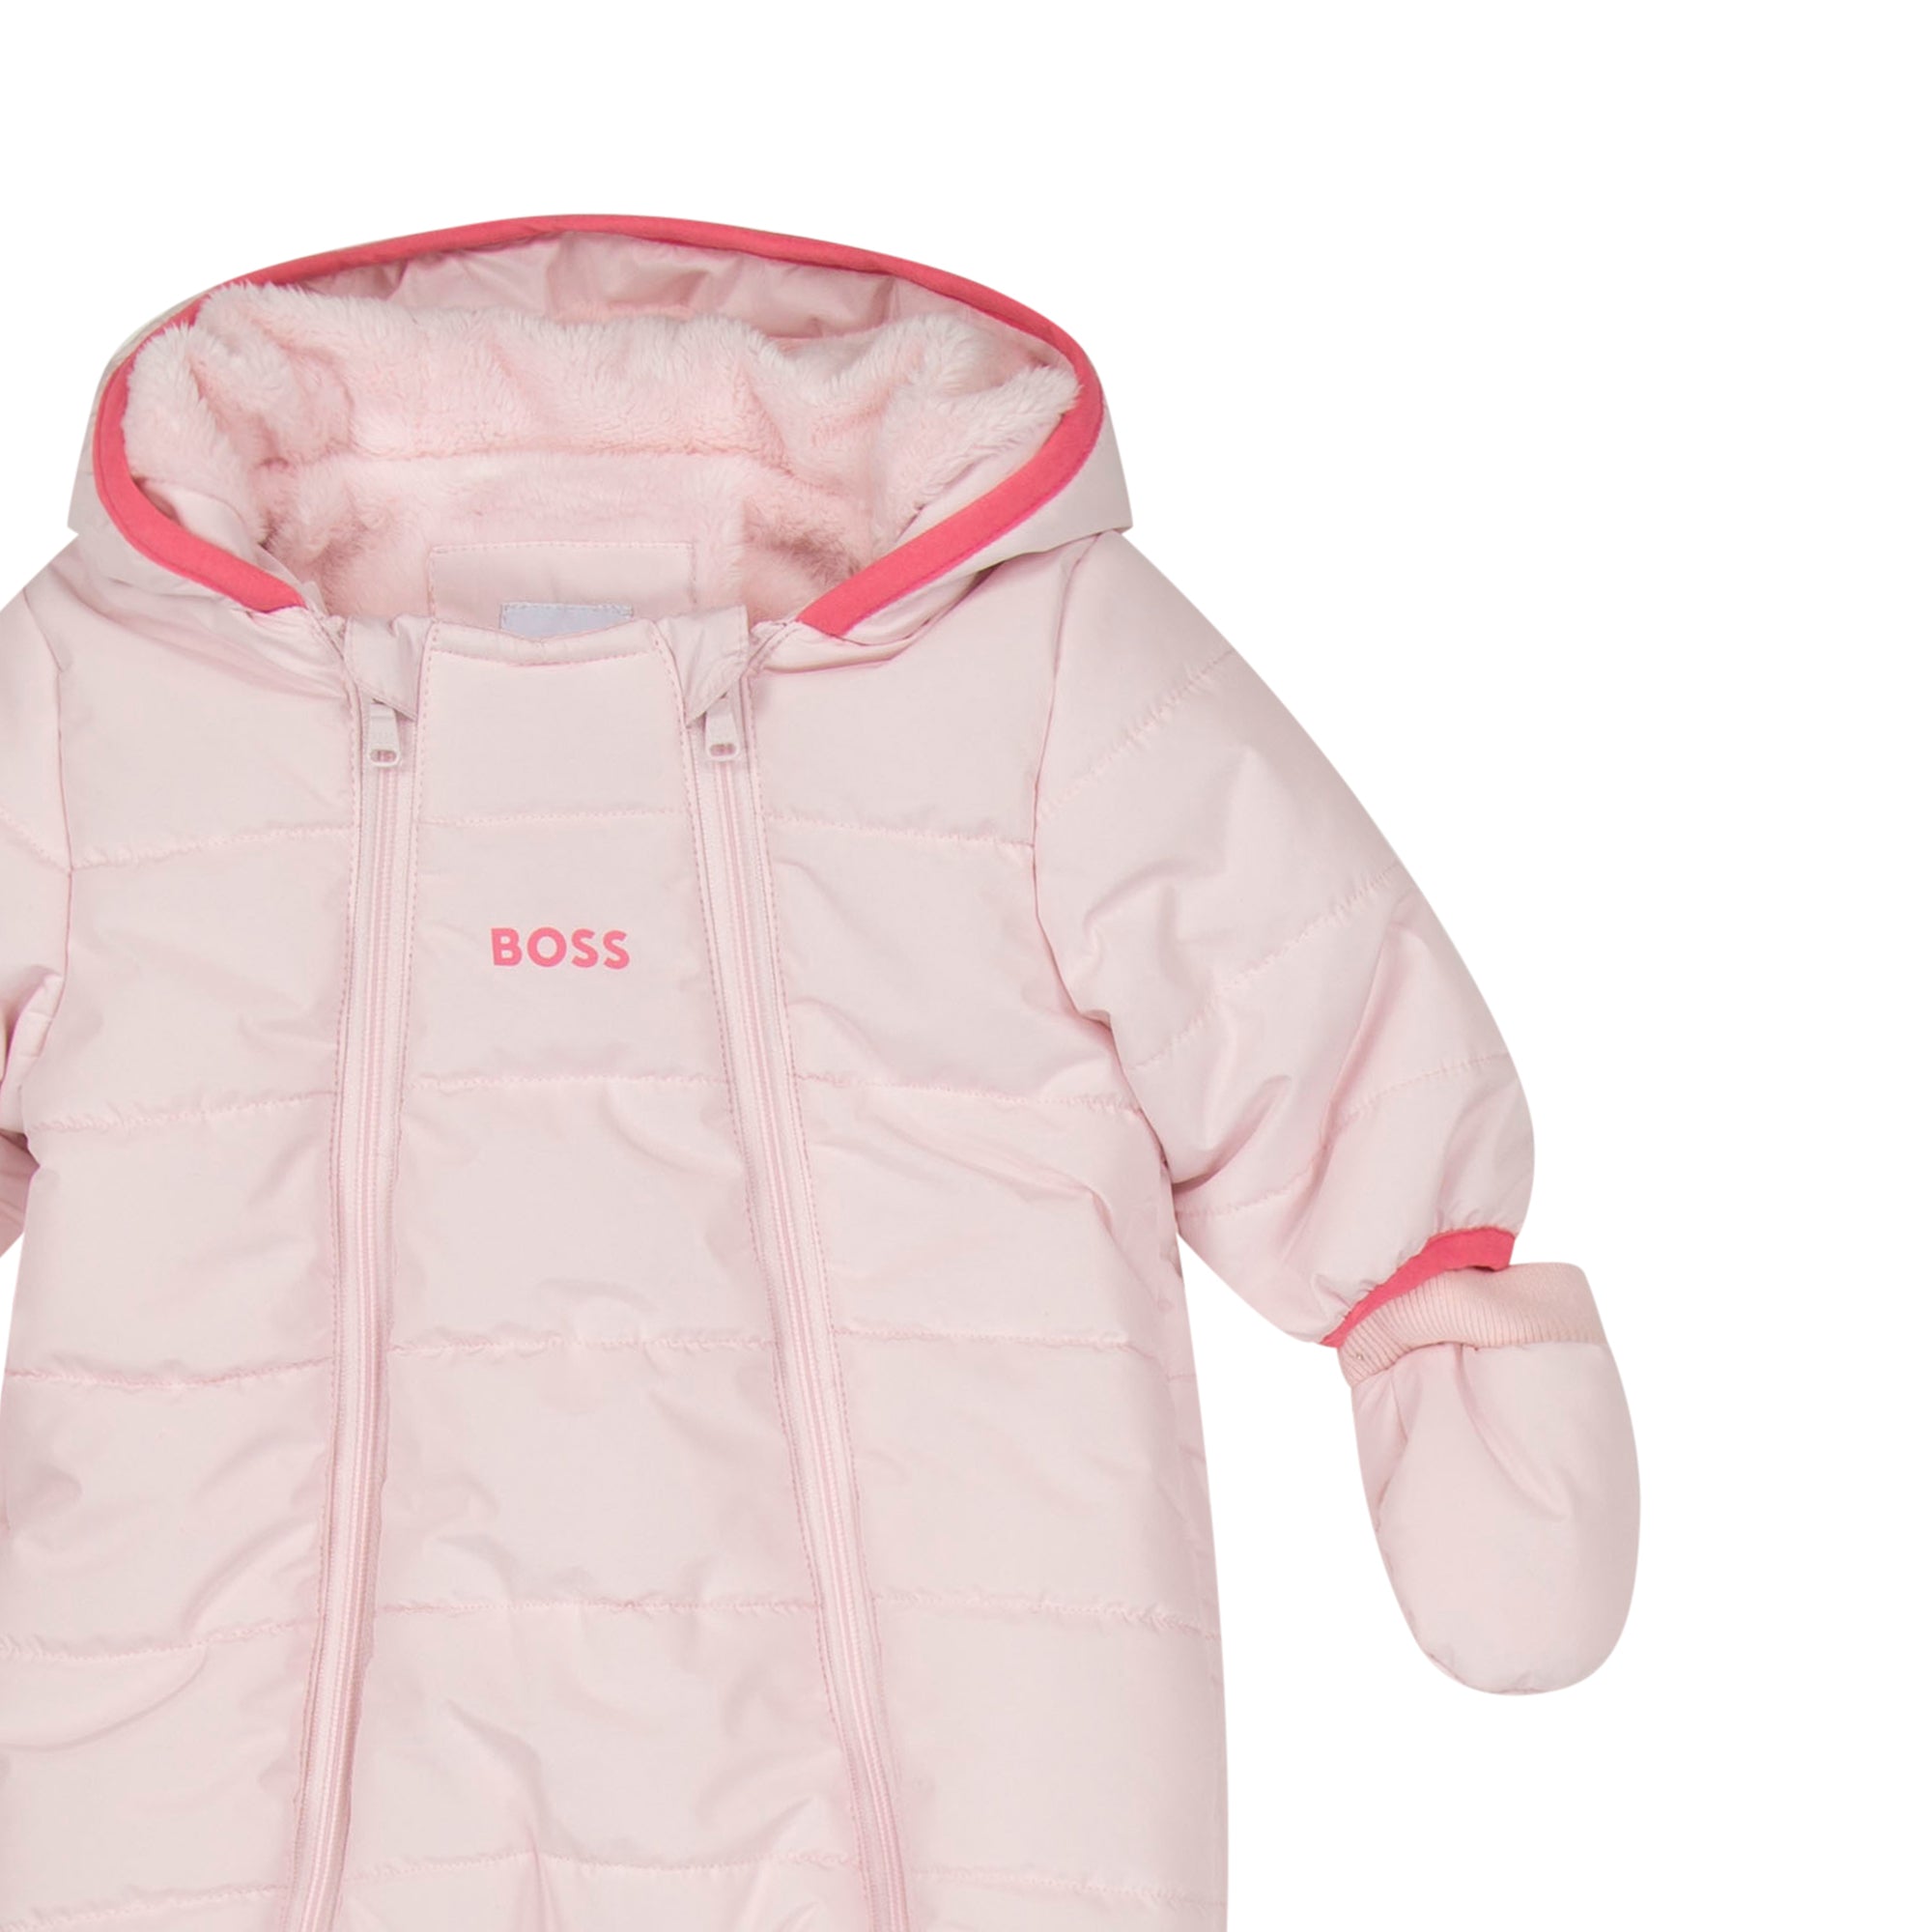 Hugo Boss Baby Girls Pink Snowsuit